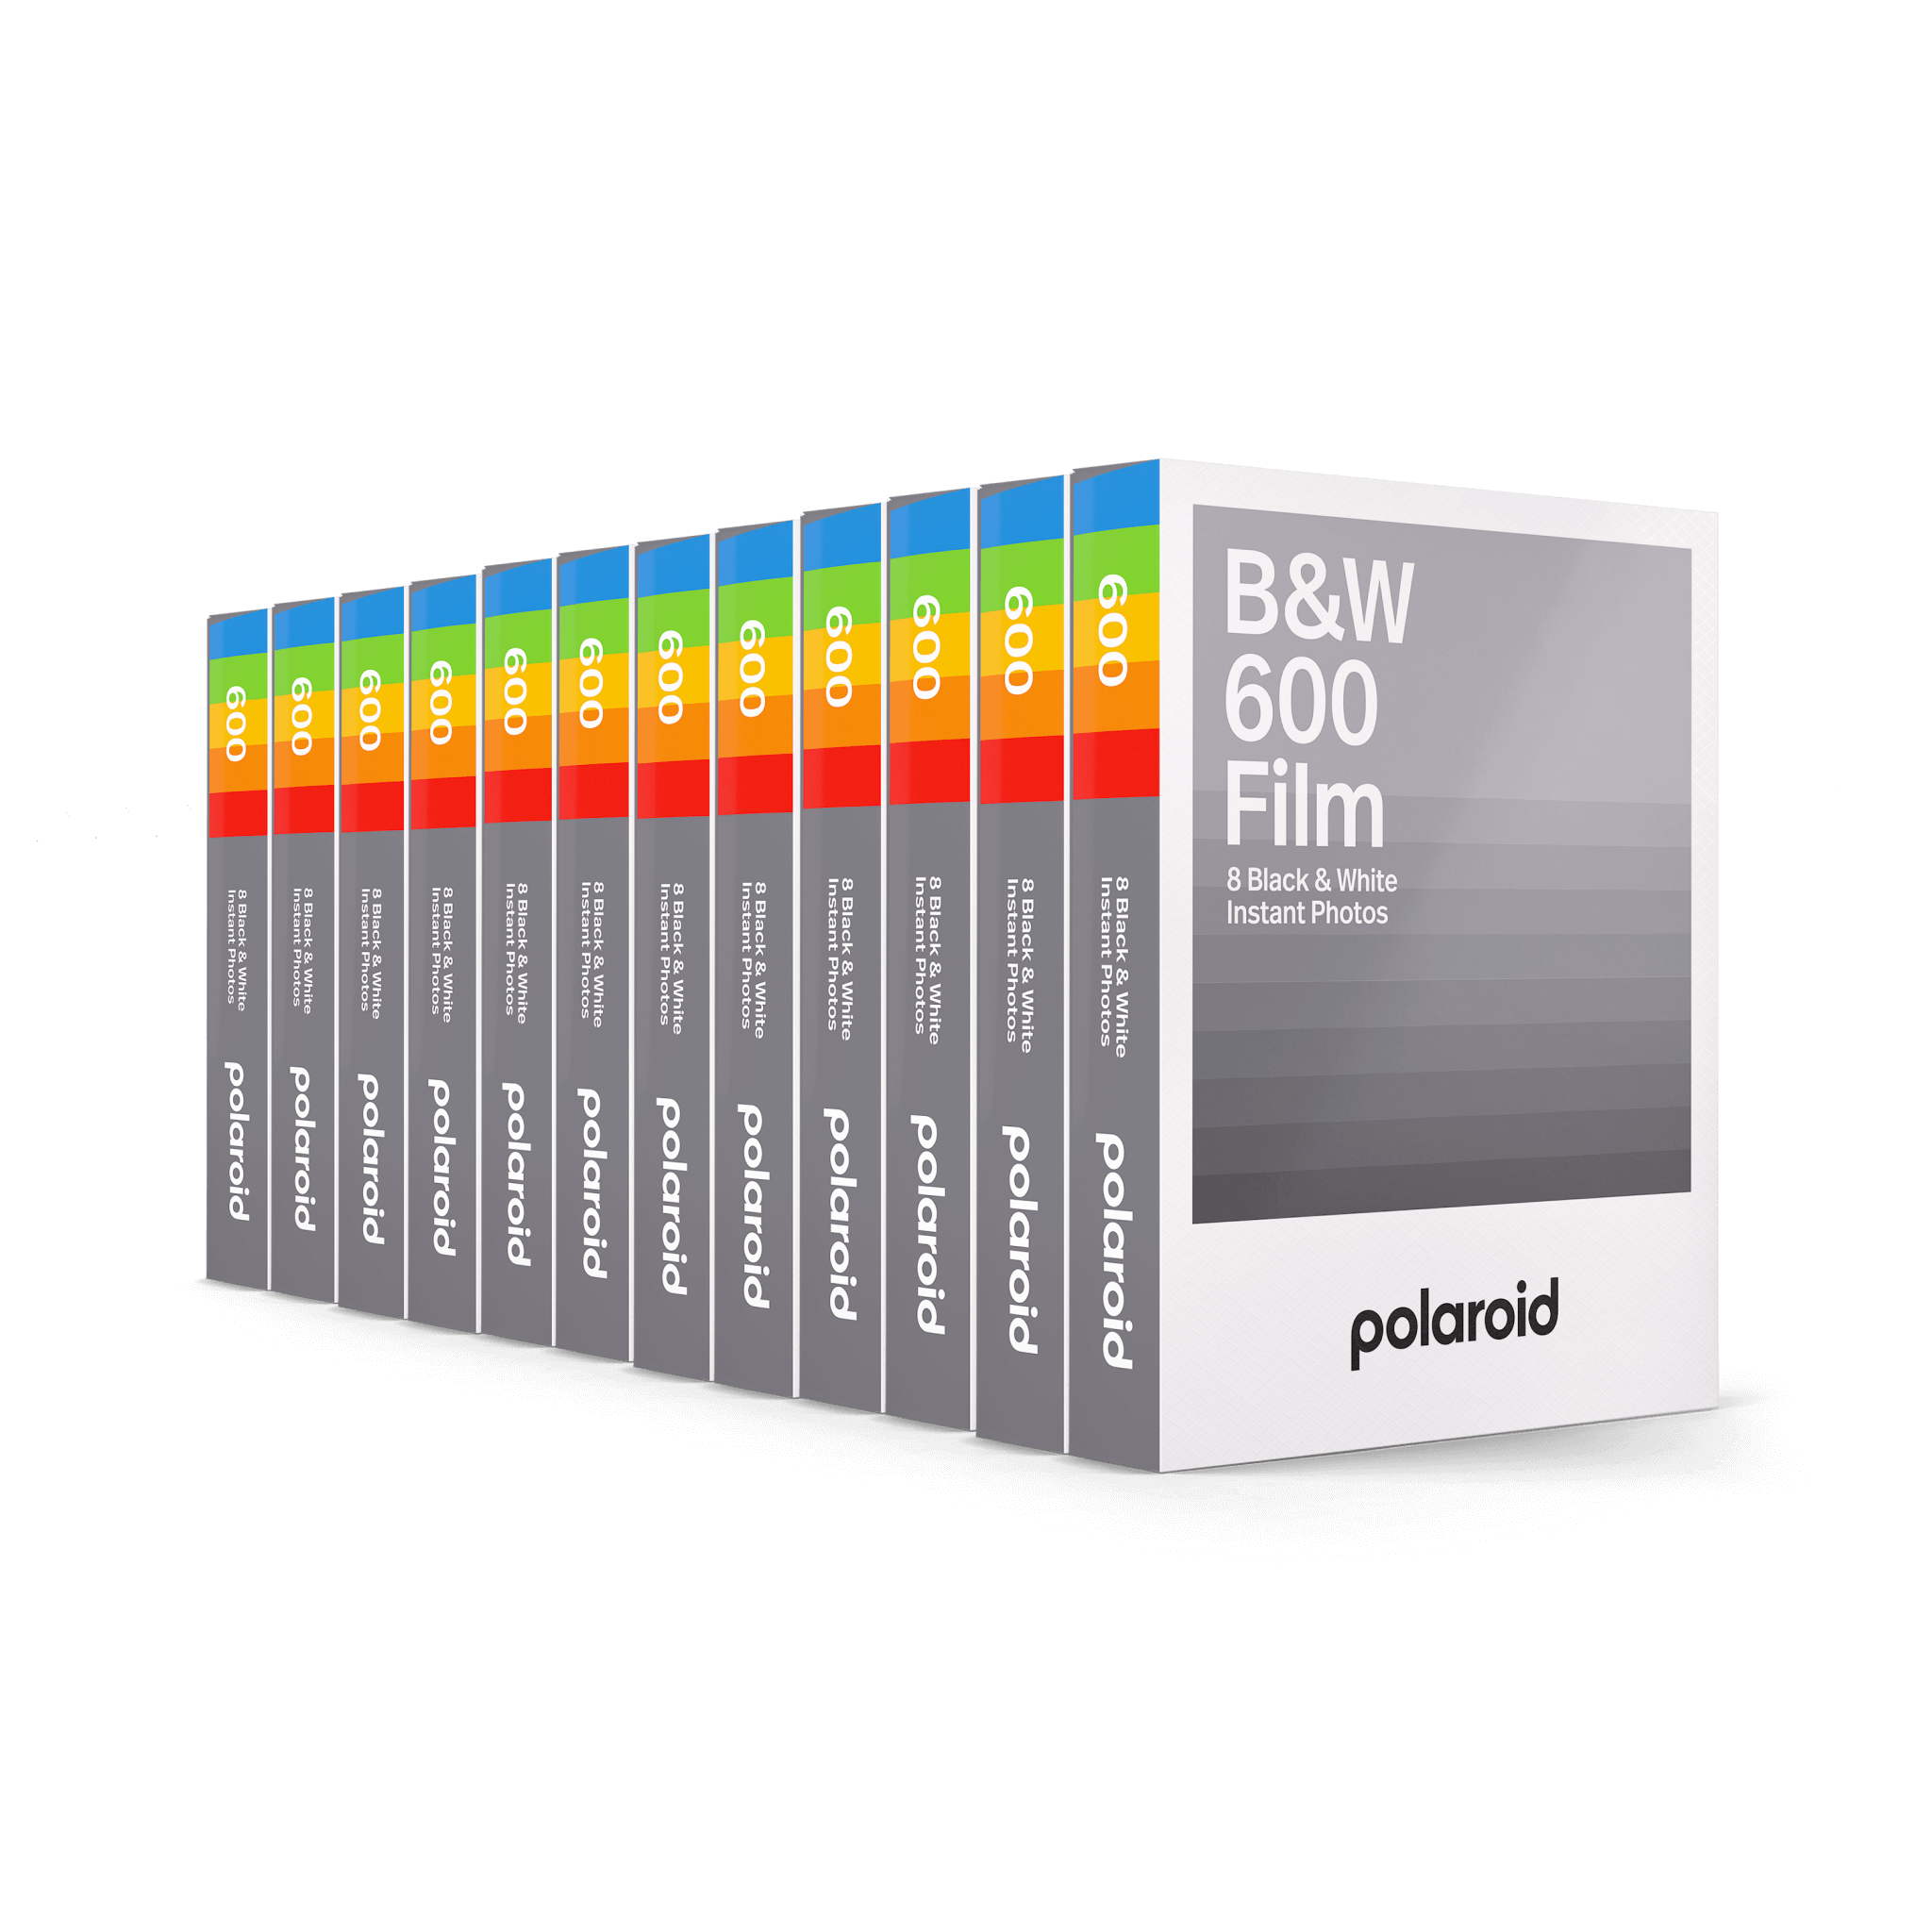 Polaroid Color I-type Instant Film Color Frames Edition For Polaroid i-Type  Cameras – CineStill Film